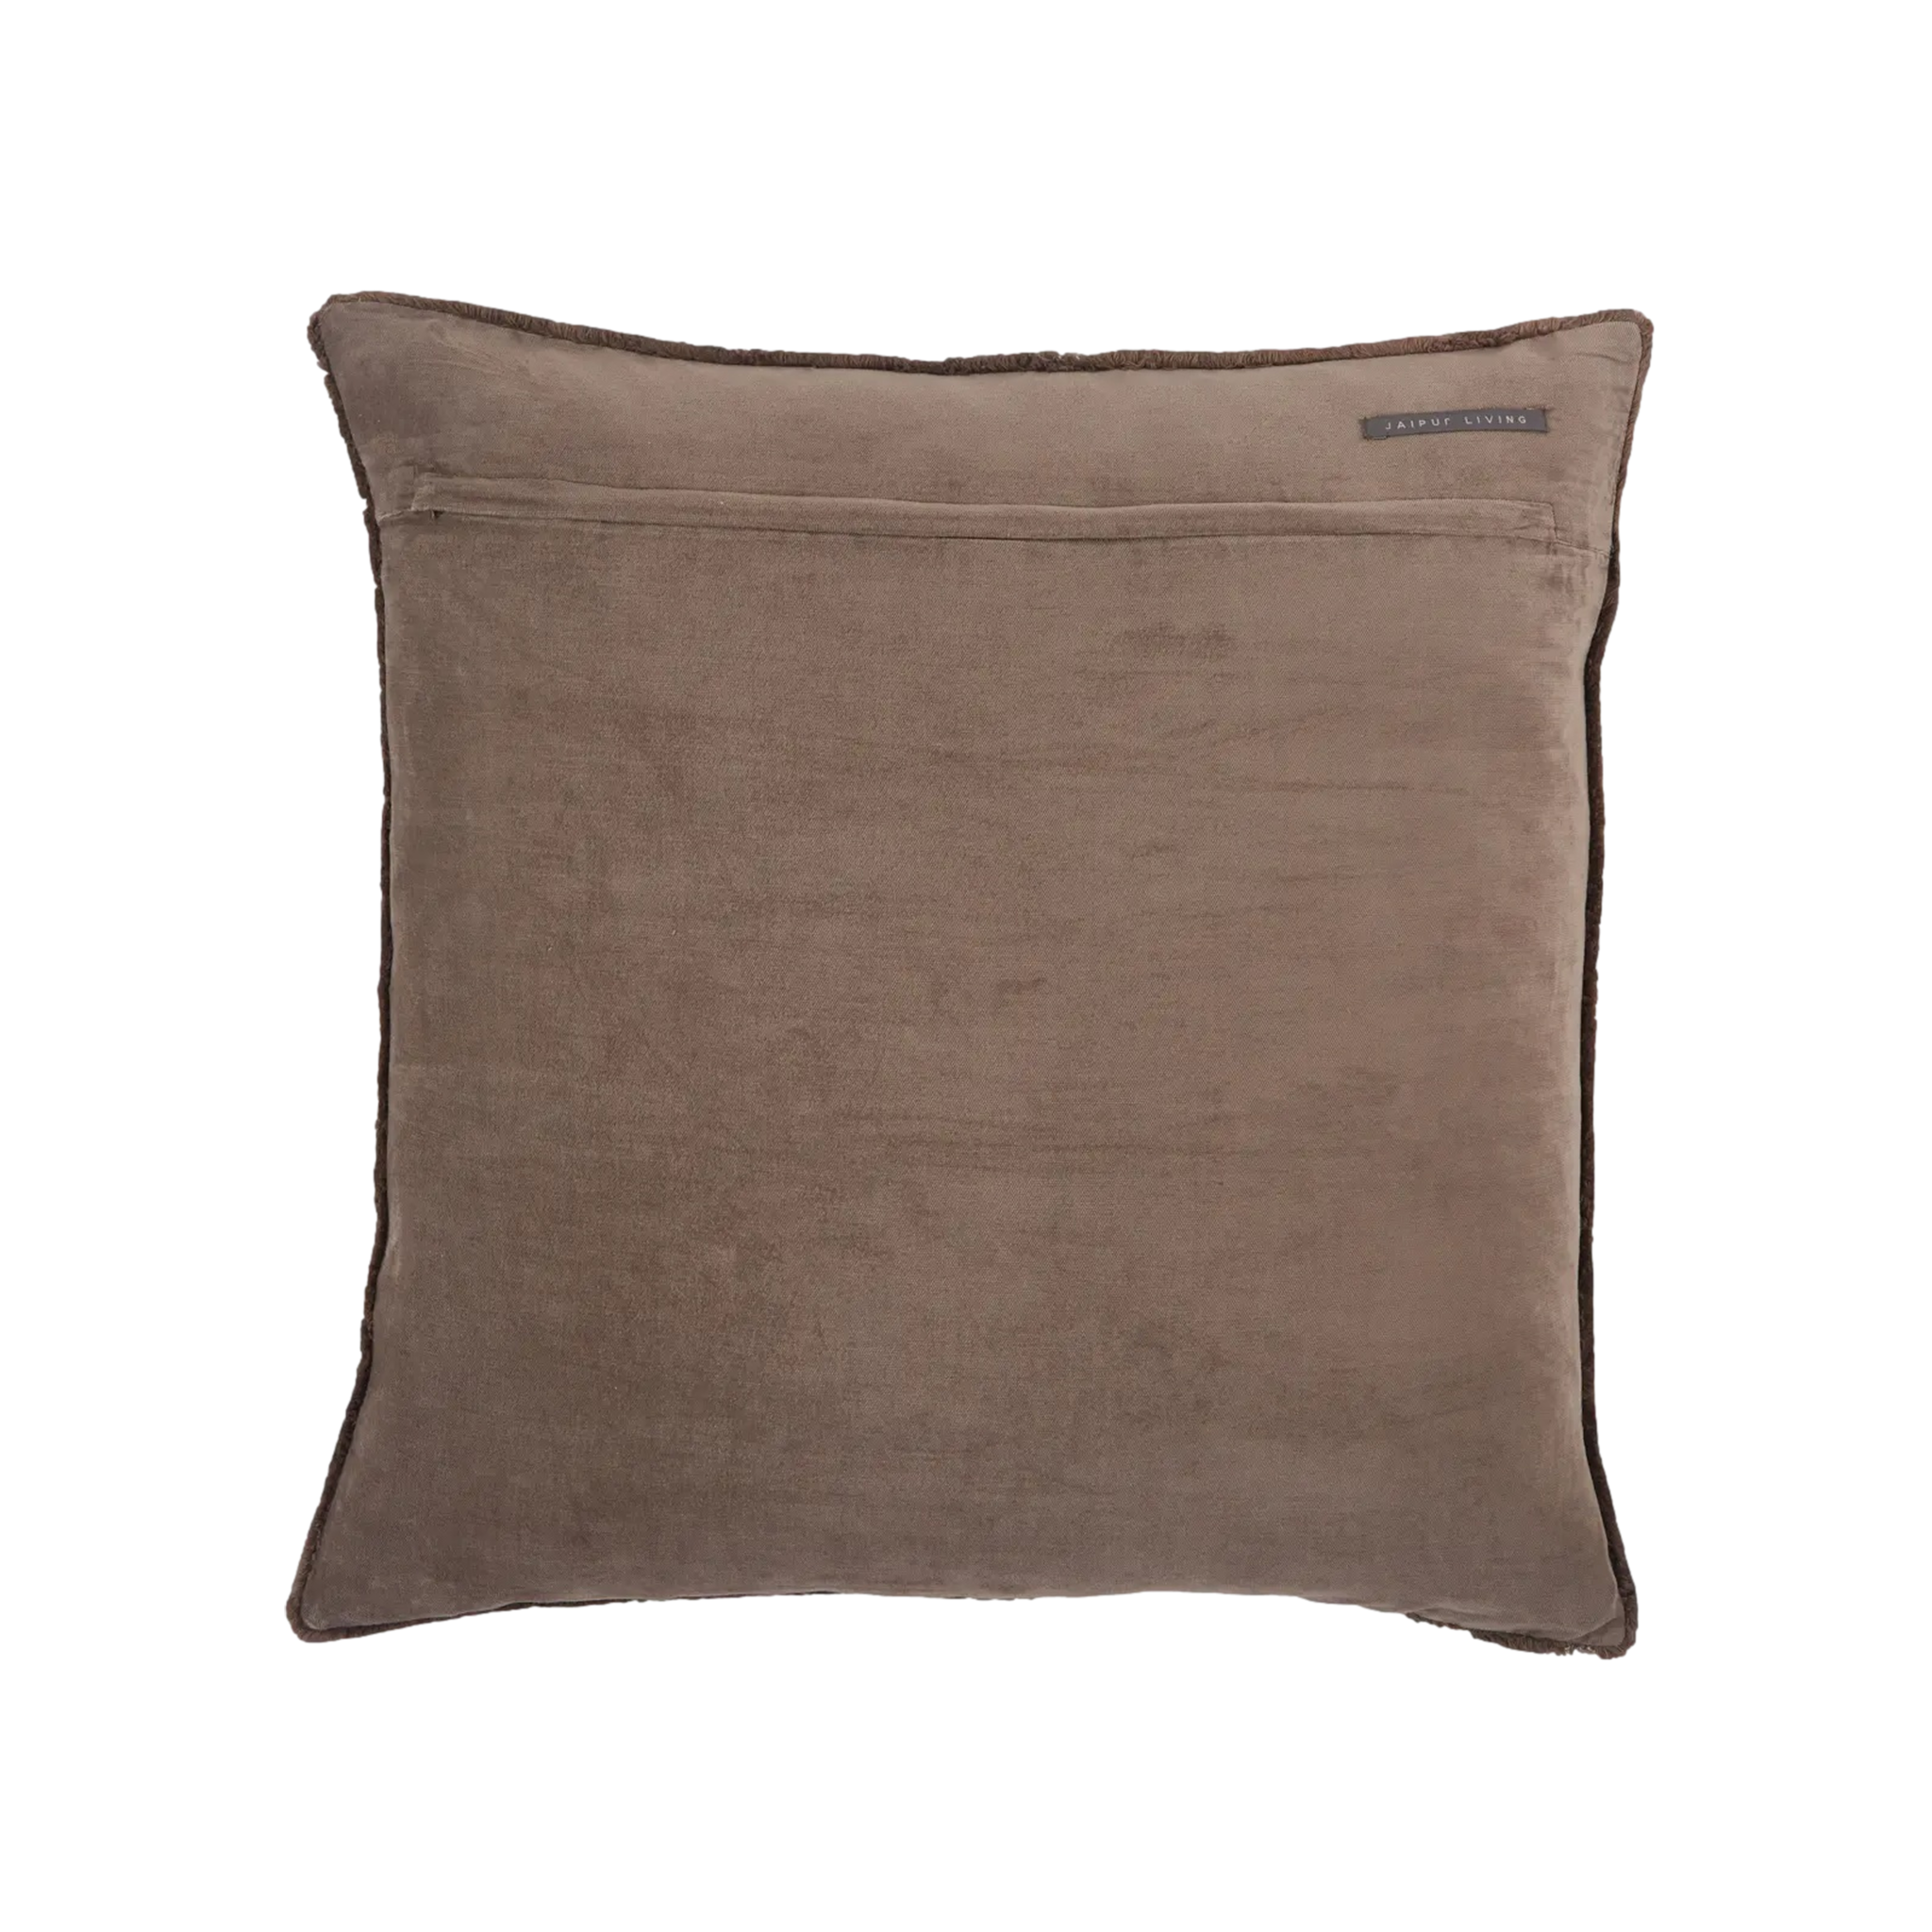 Sunbury Pillow in Dark Taupe